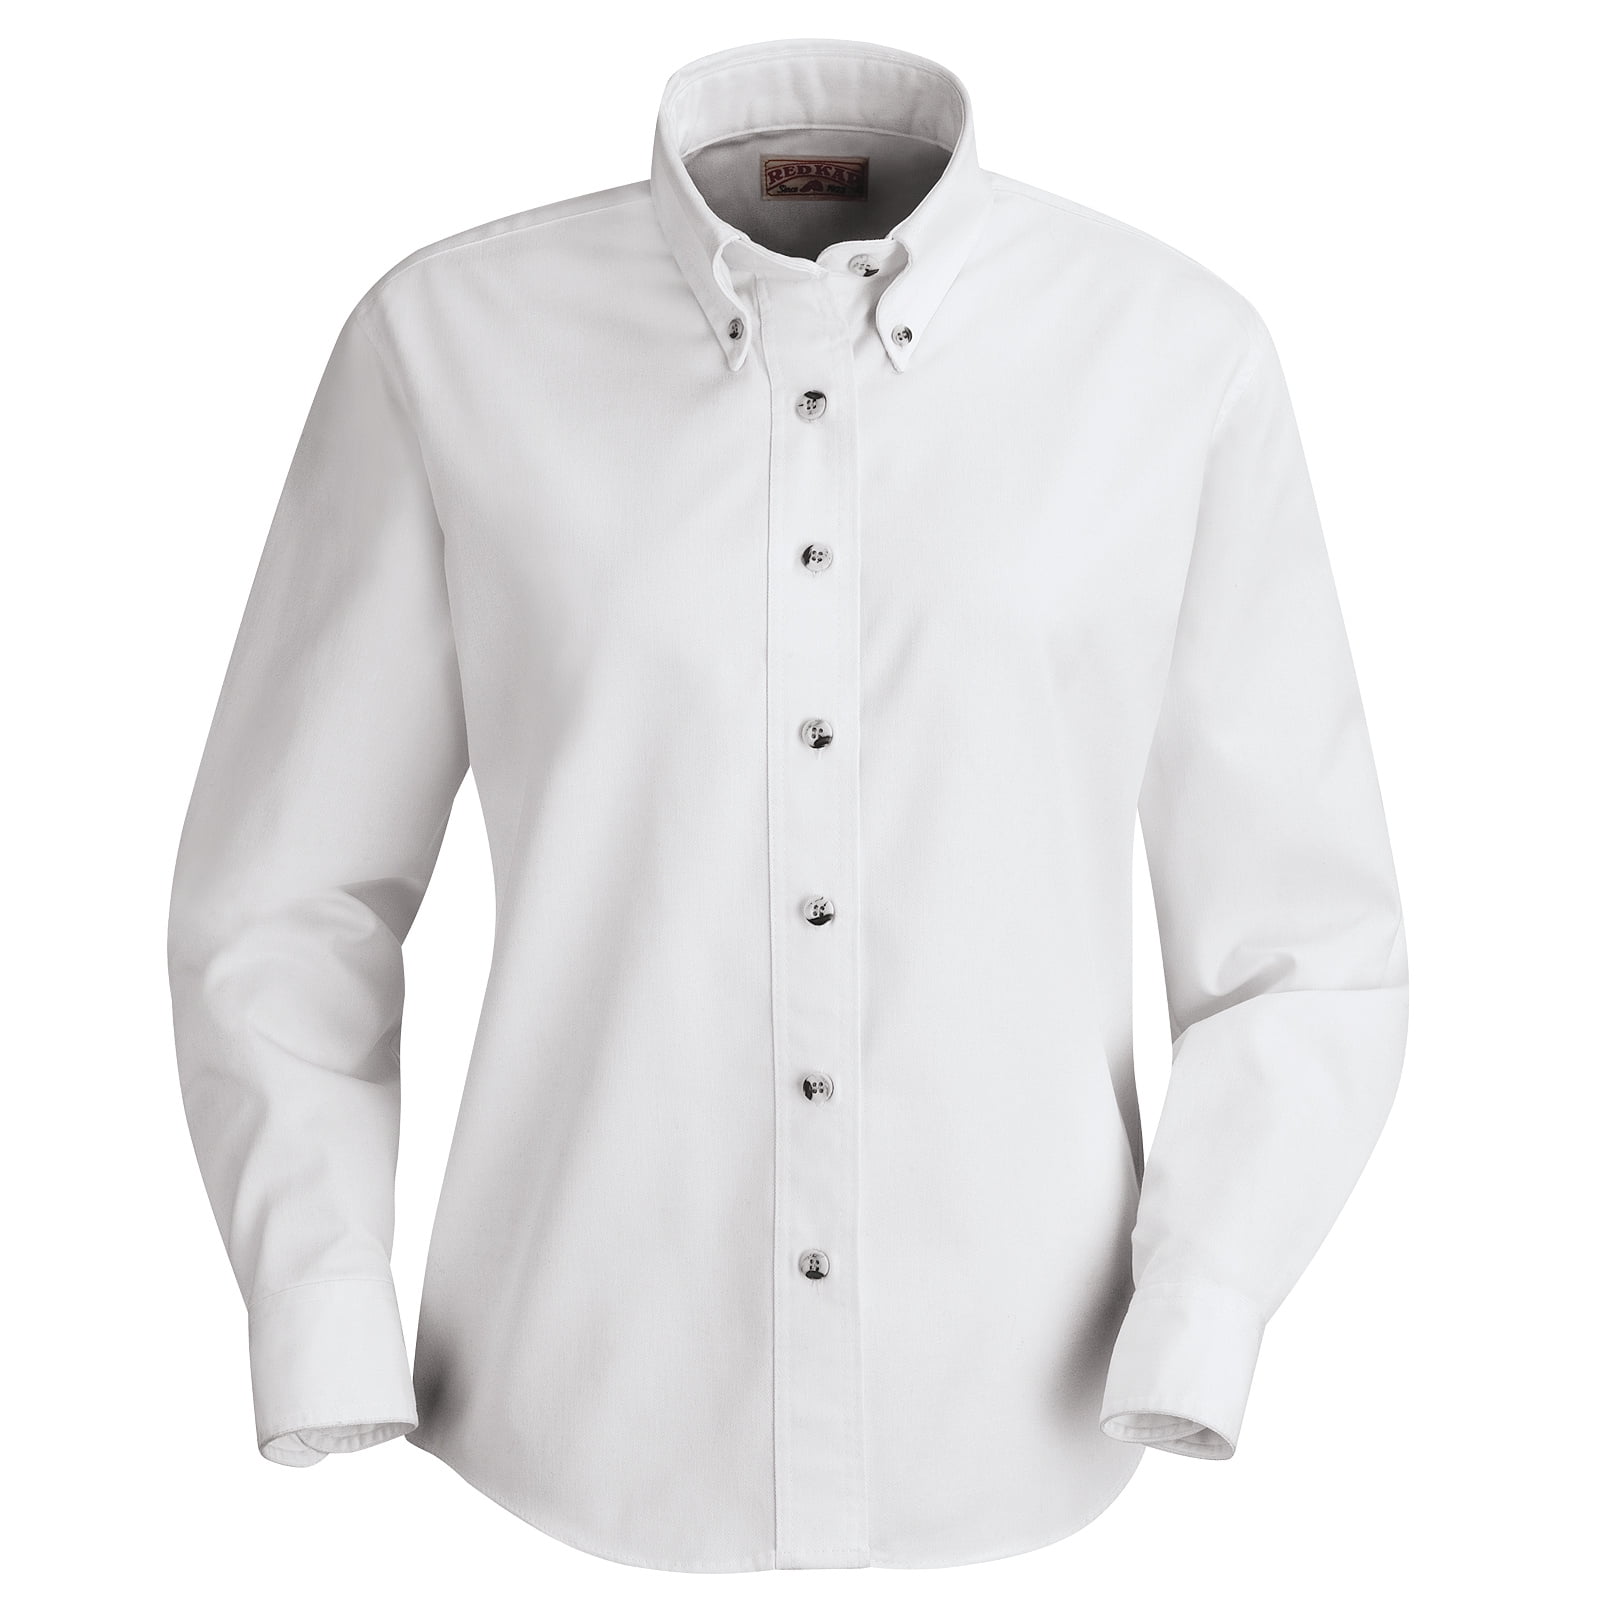 womens white dress shirt walmart